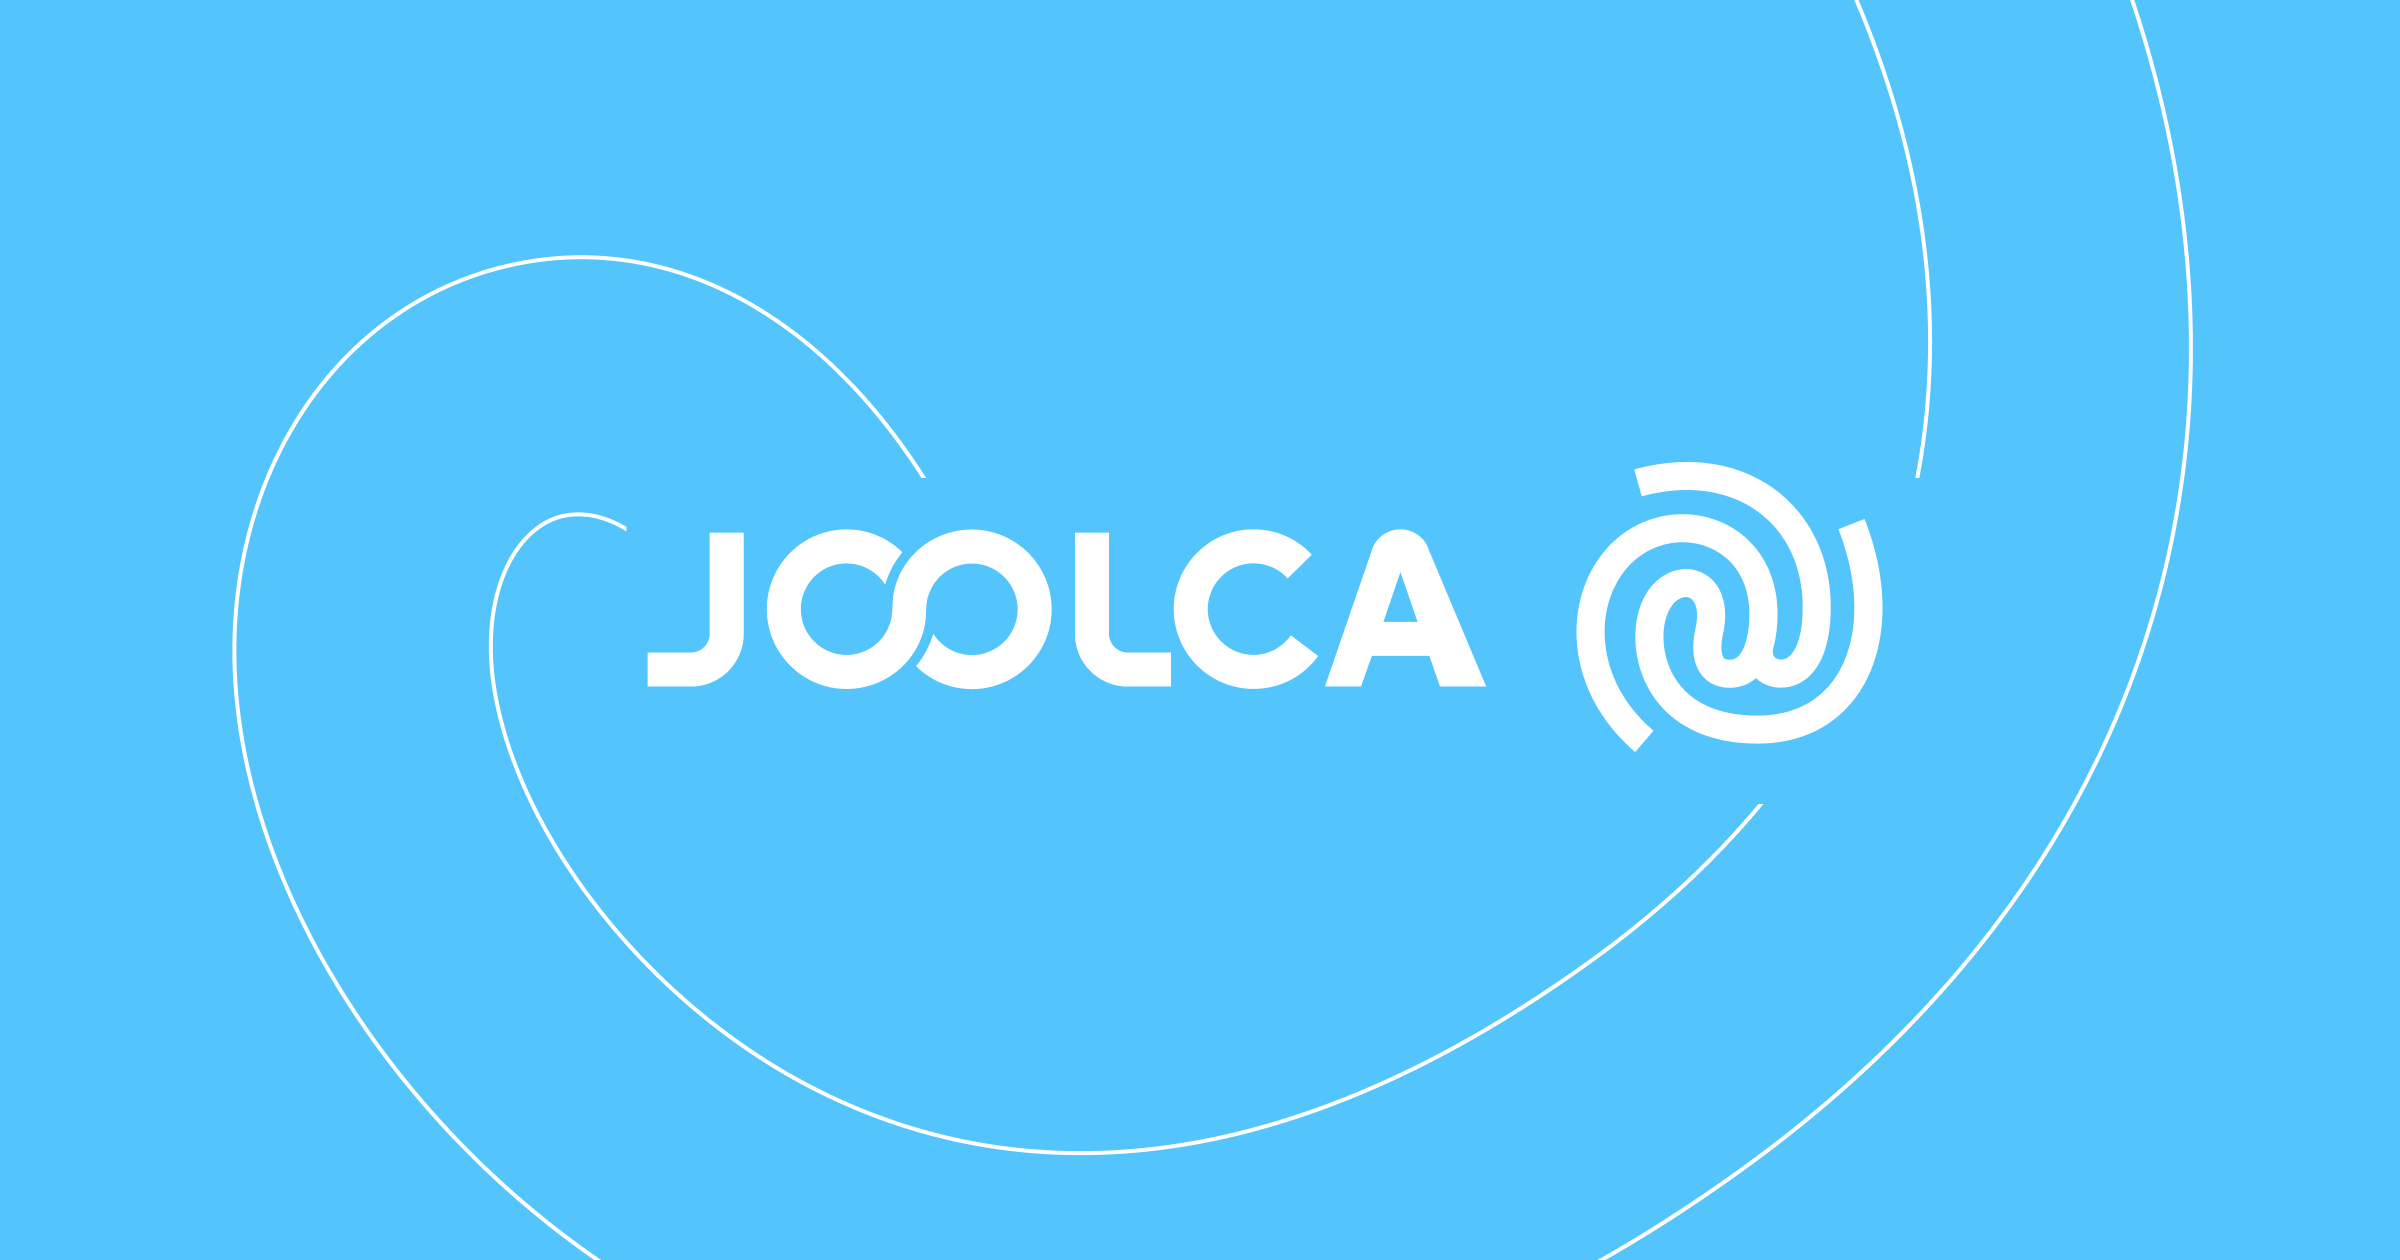 Hoe op inkomsten gebaseerde financiering Joolca hielp om de groei te versnellen